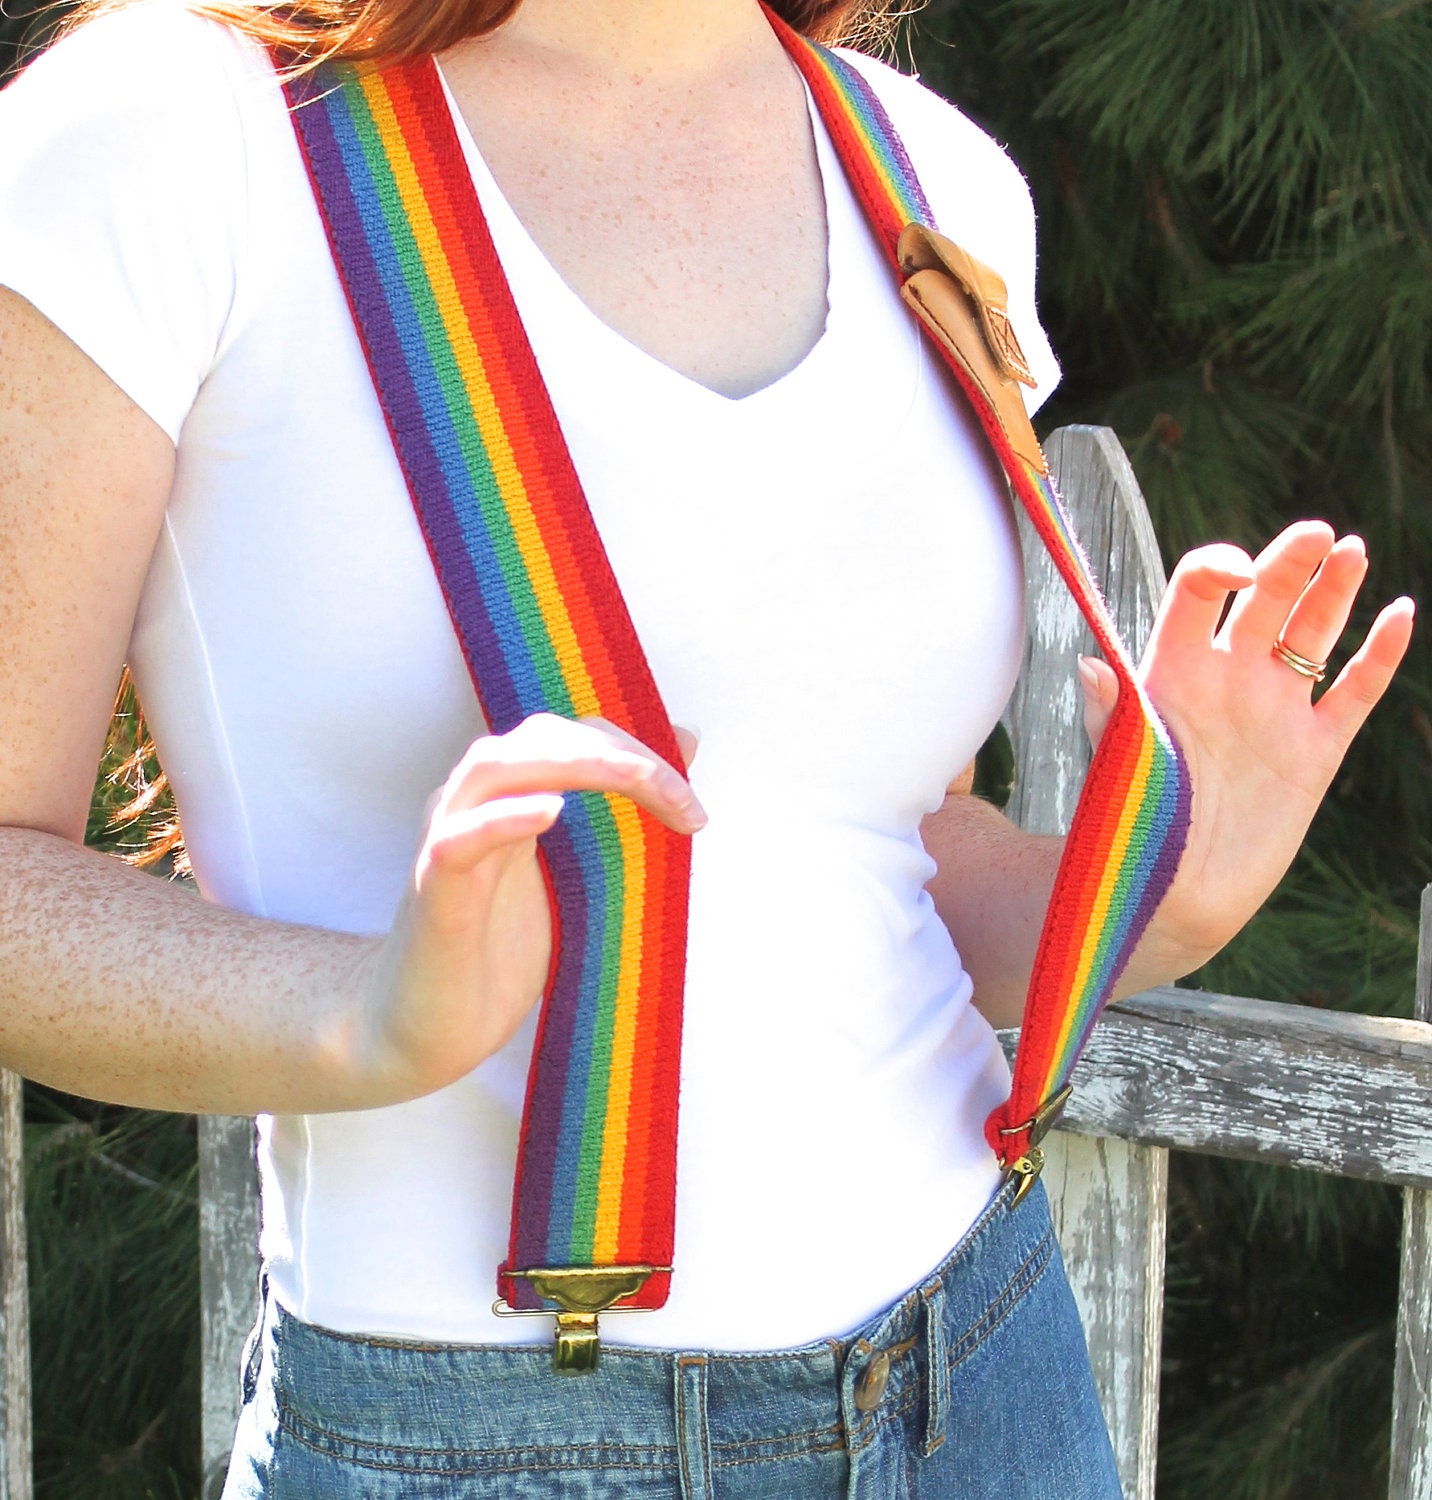 Fantastic Rainbow Suspenders - Vintage 70s Adult Sized Suspenders - Colorful Wide Elastic